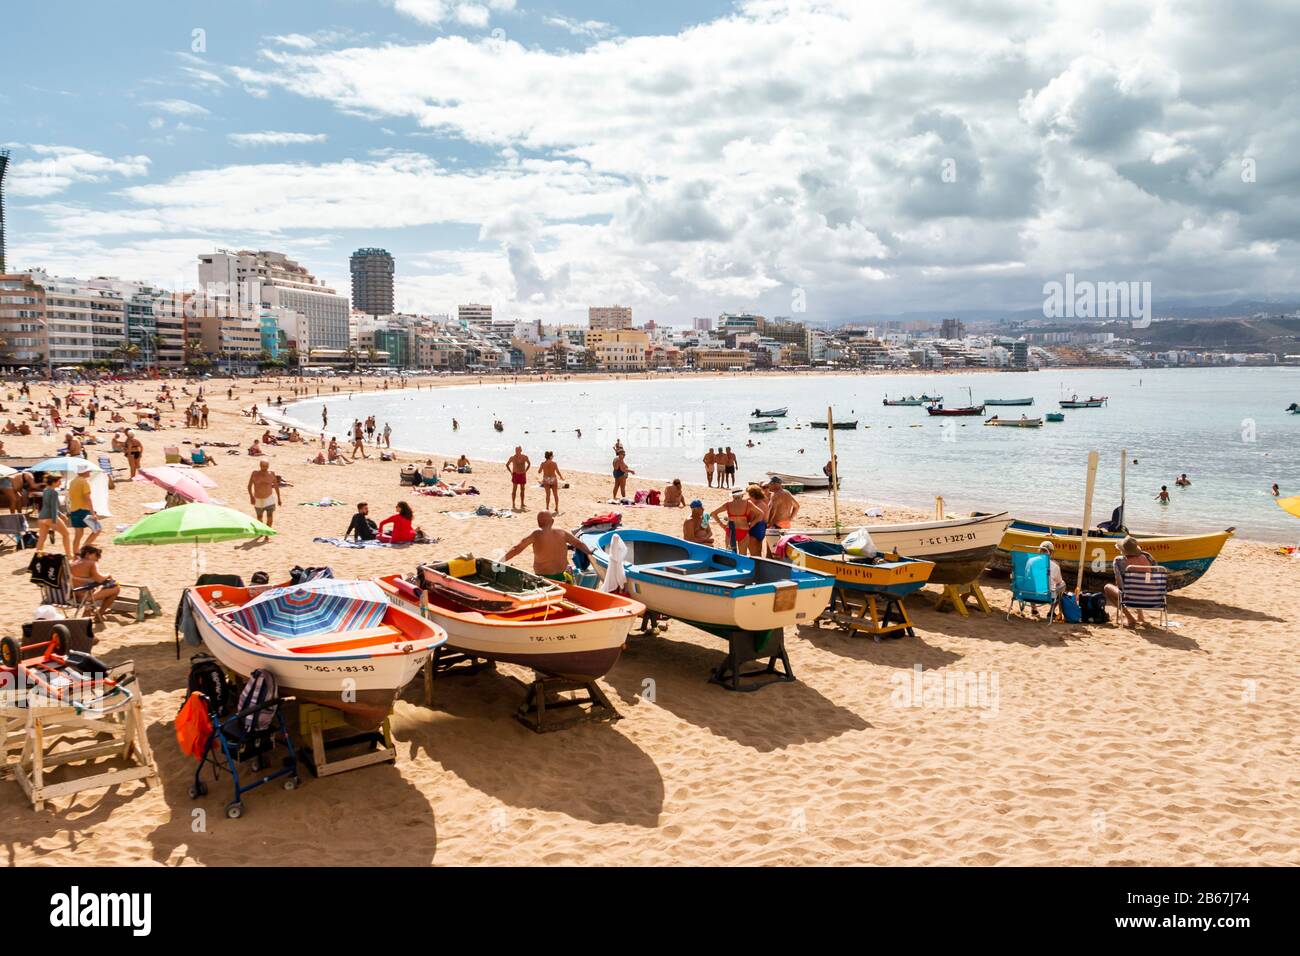 Las PALMAS, INSEL GRAN CANARIA, SPANIEN - JANUAR 2020: Menschen schwimmen und entspannen in der Playa de las Canteras Stockfoto